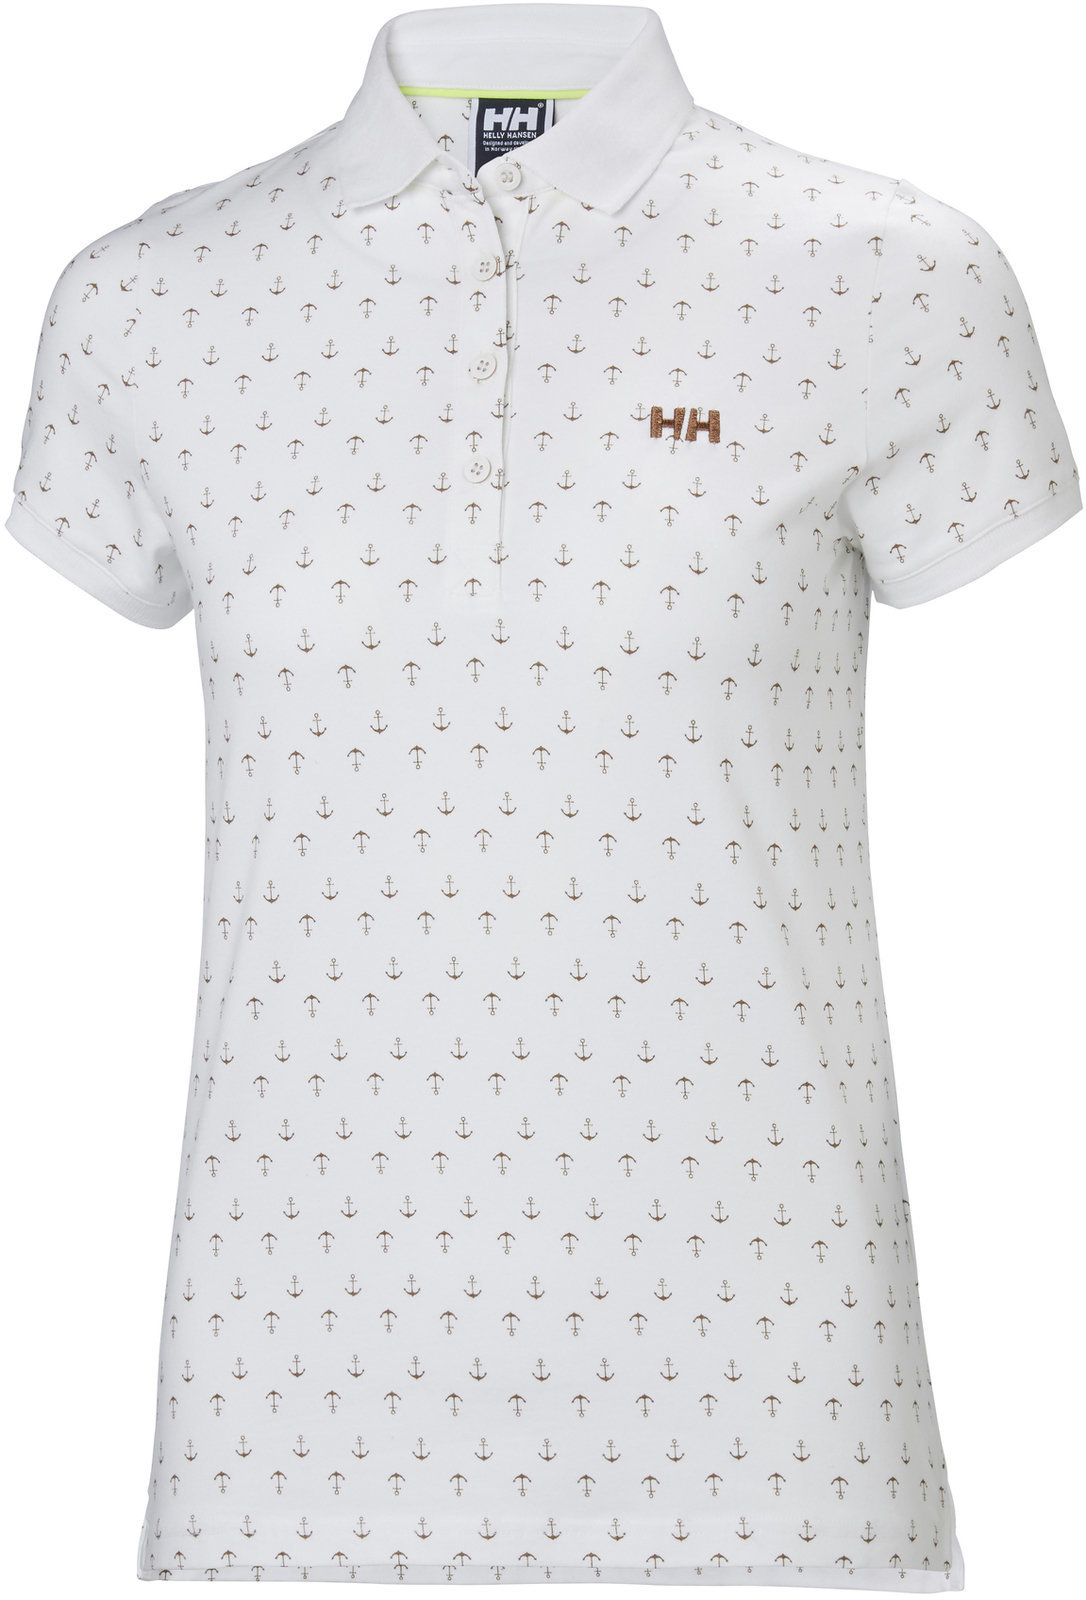 T-Shirt Helly Hansen W Naiad Breeze Polo White Anchor - XS